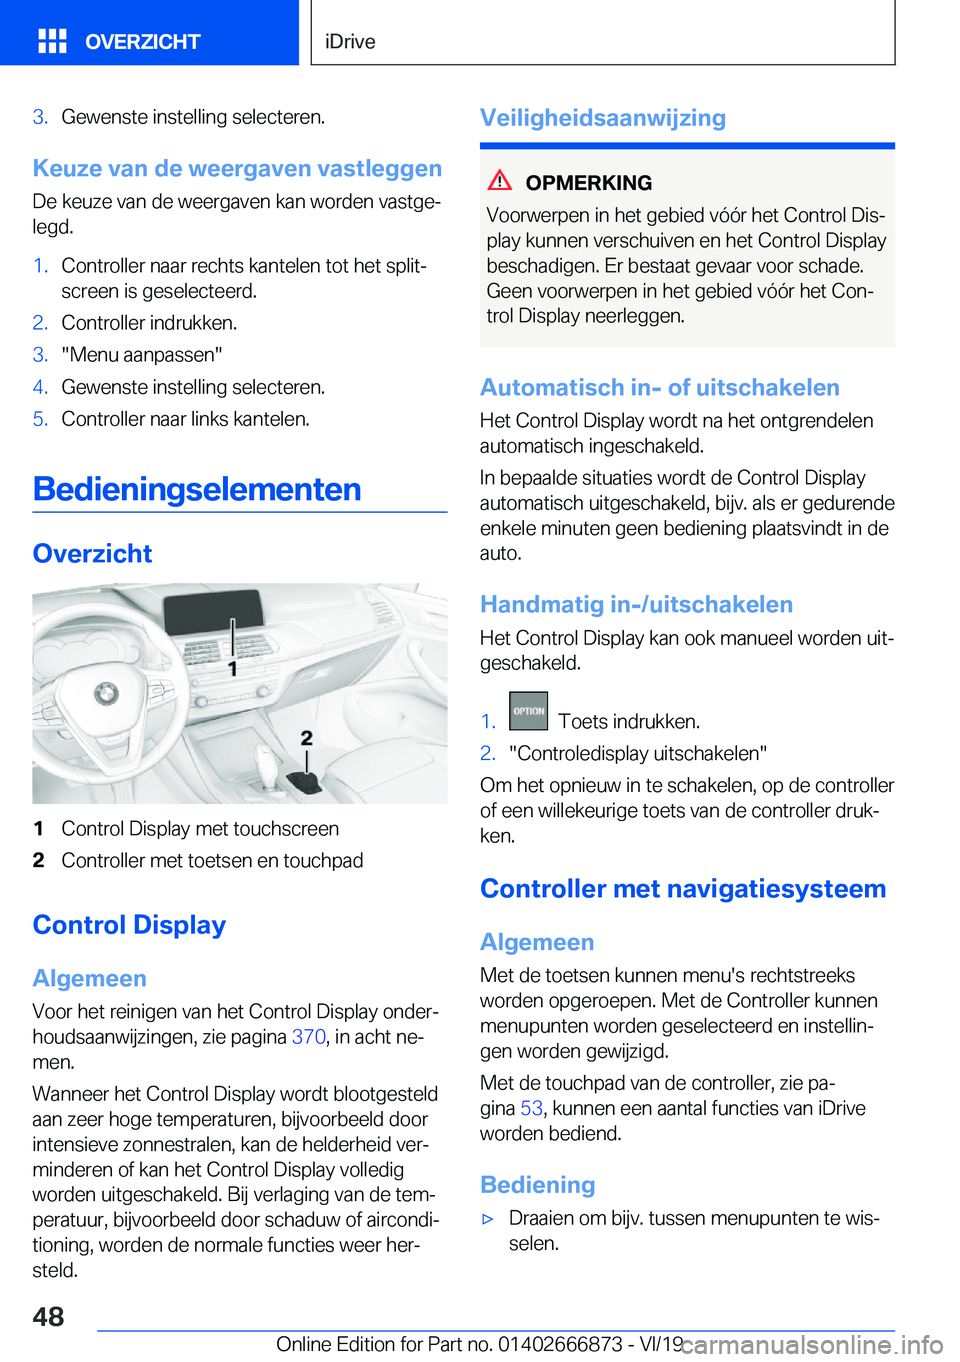 BMW X4 M 2020  Instructieboekjes (in Dutch) �3�.�G�e�w�e�n�s�t�e��i�n�s�t�e�l�l�i�n�g��s�e�l�e�c�t�e�r�e�n�.
�K�e�u�z�e��v�a�n��d�e��w�e�e�r�g�a�v�e�n��v�a�s�t�l�e�g�g�e�n�D�e��k�e�u�z�e��v�a�n��d�e��w�e�e�r�g�a�v�e�n��k�a�n��w�o�r�